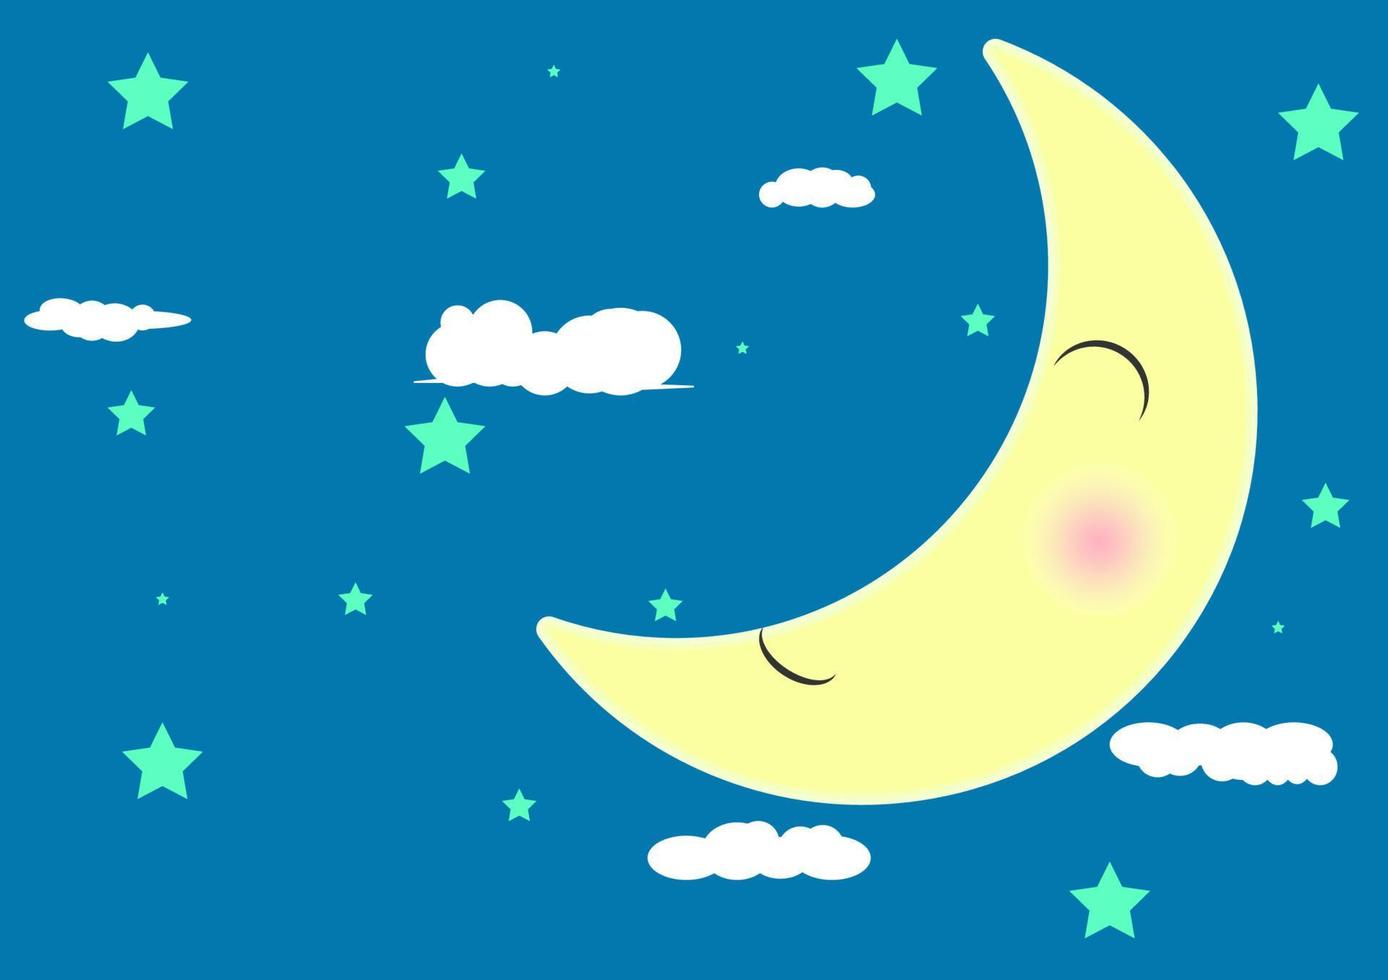 moon cartoon with sky and cloud vector illustration